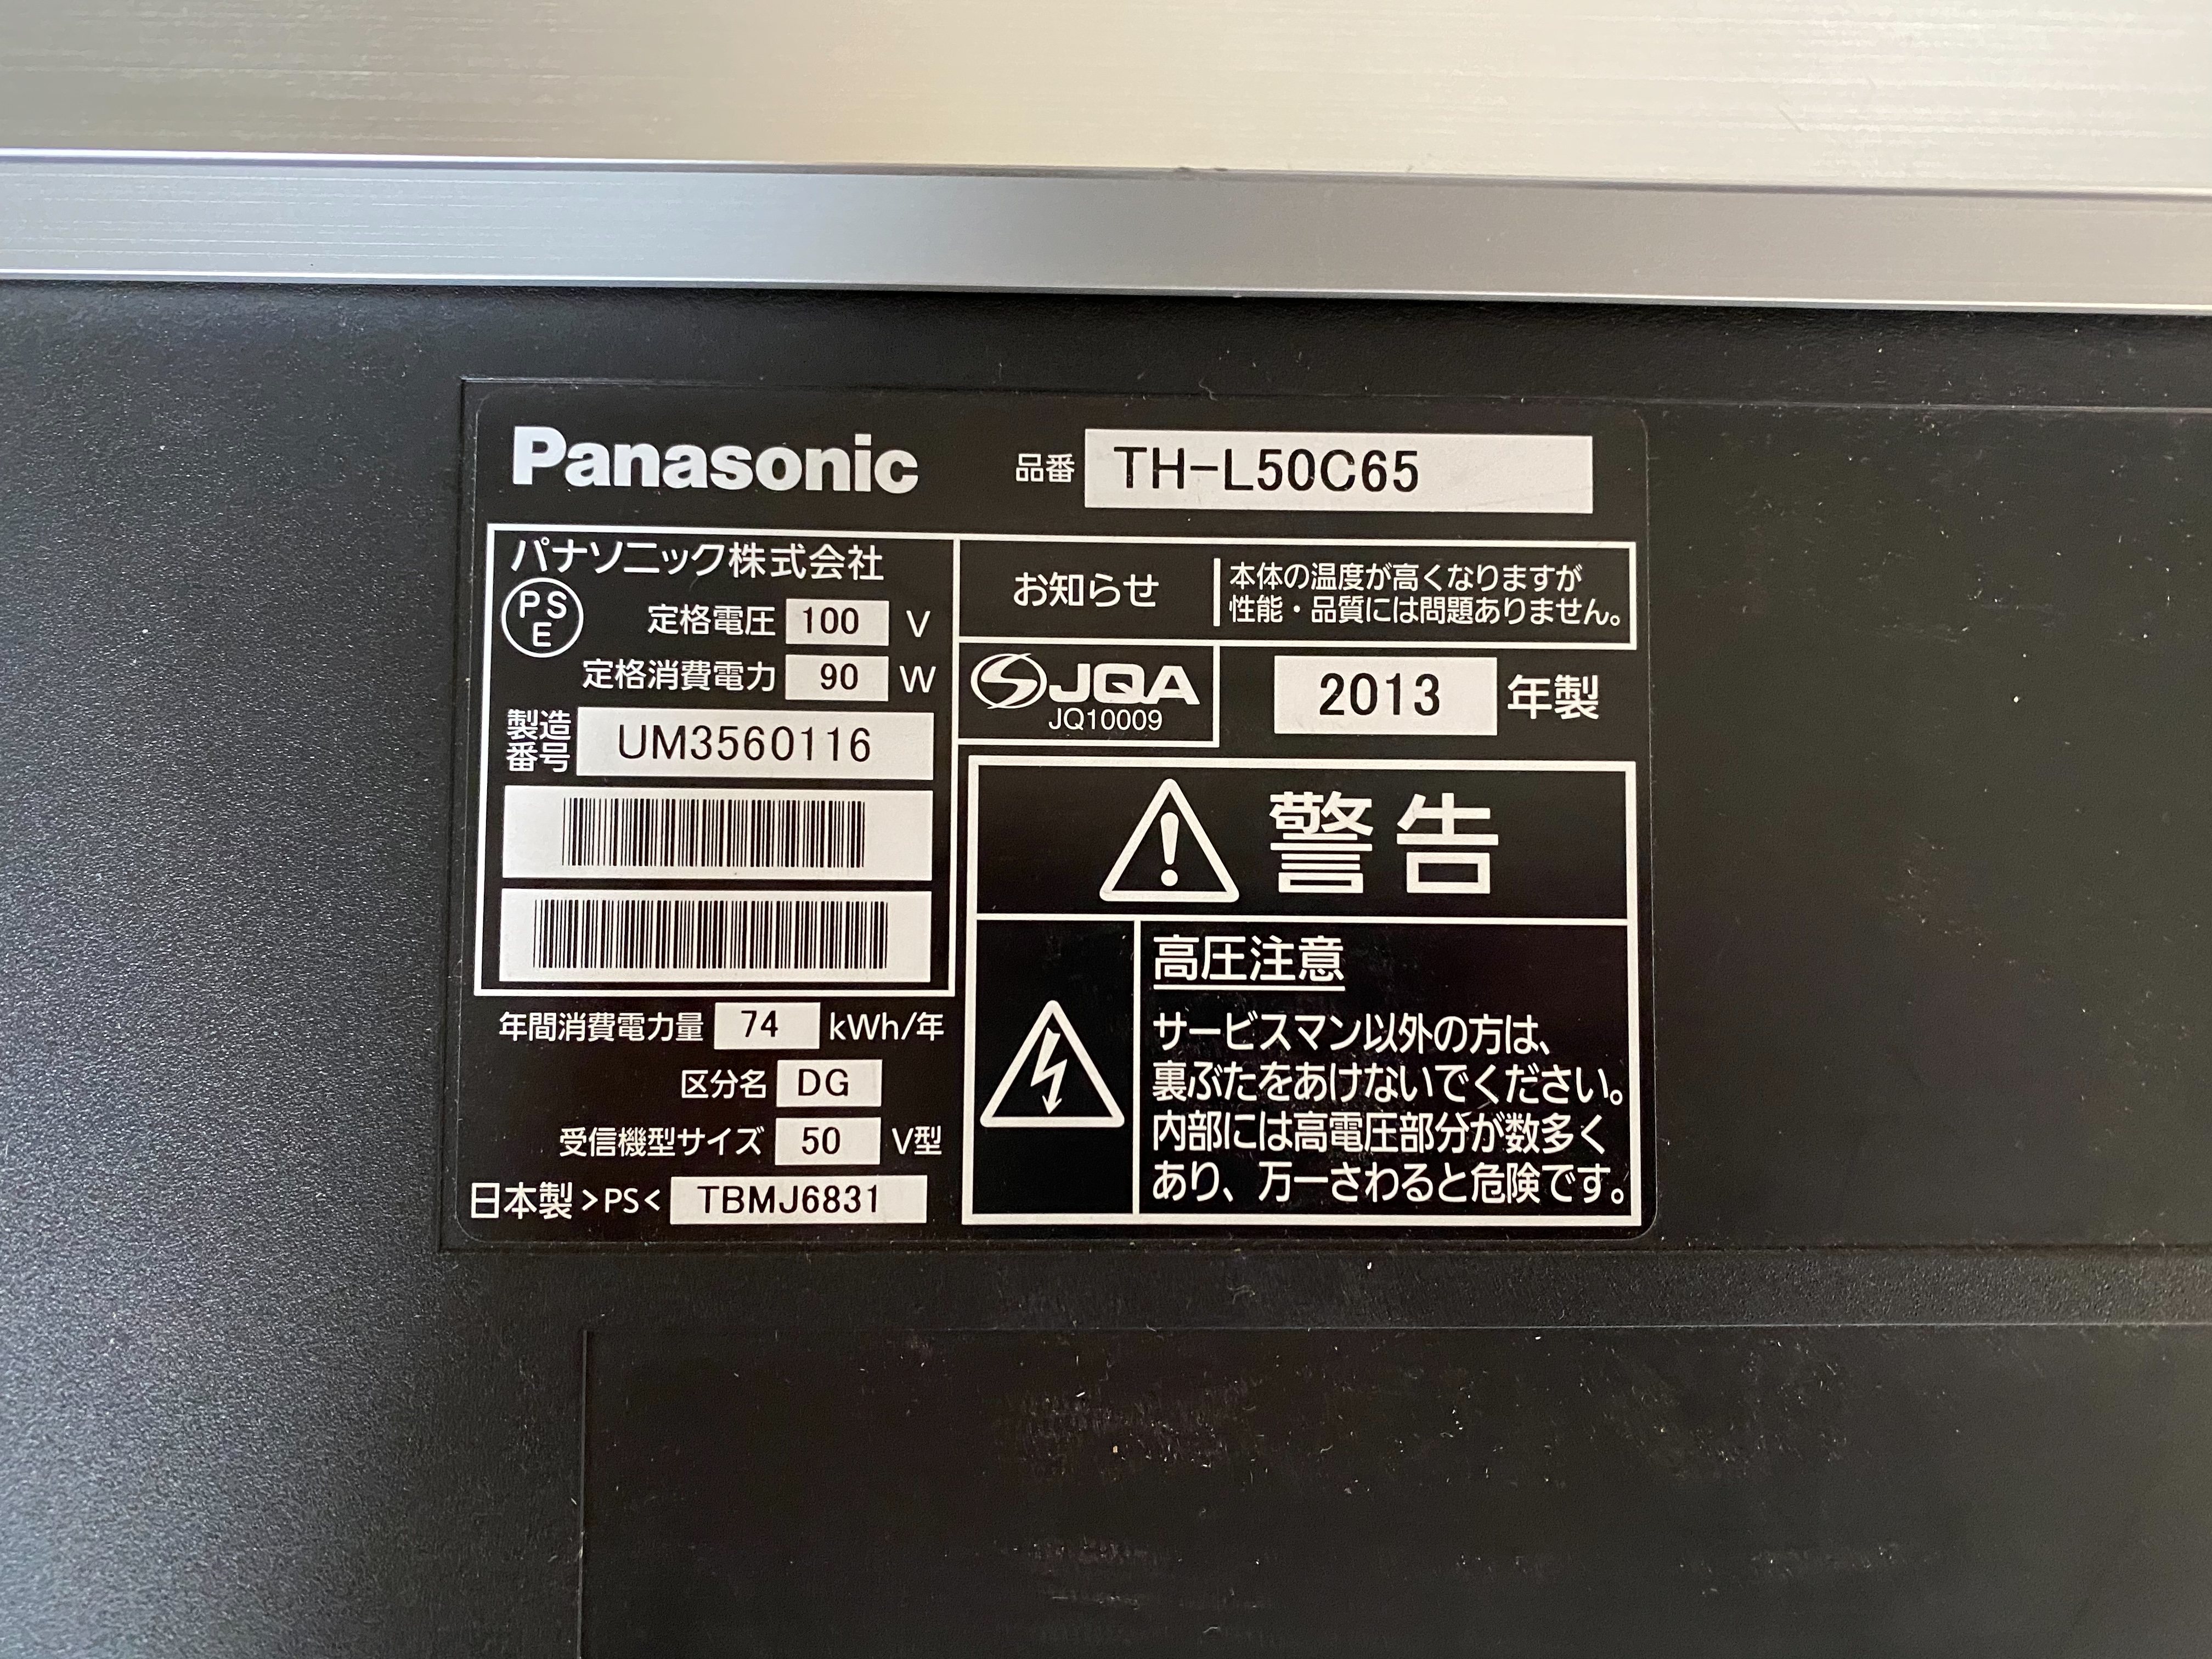 Panasonic 50V型液晶モニター TH-L50C65の型番